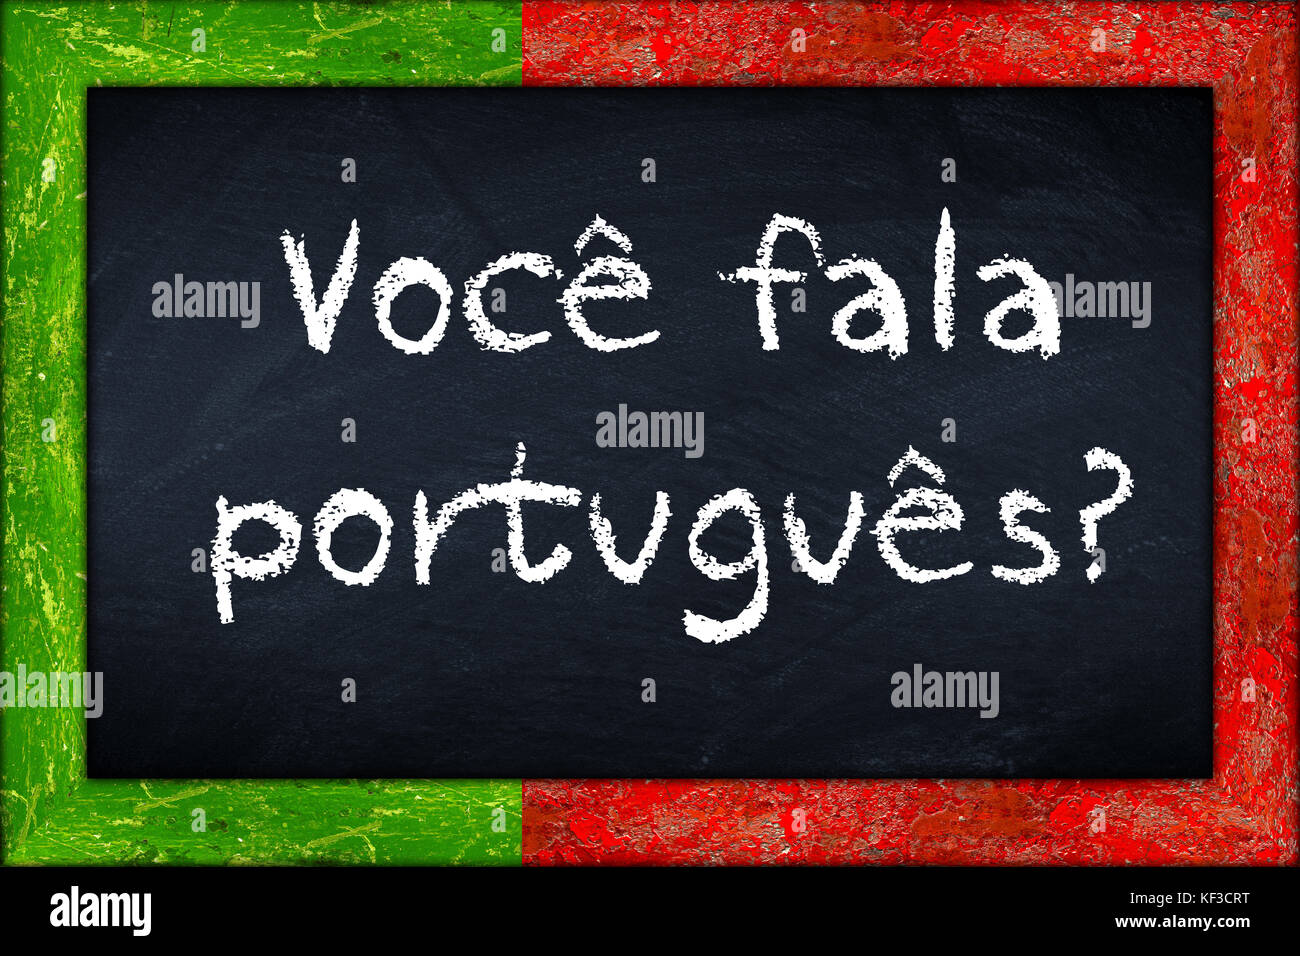 Voce fala portugues (translation: do you speak portuguese) language education concept on chalkboard blackboard with wooden portugal flag frame Stock Photo